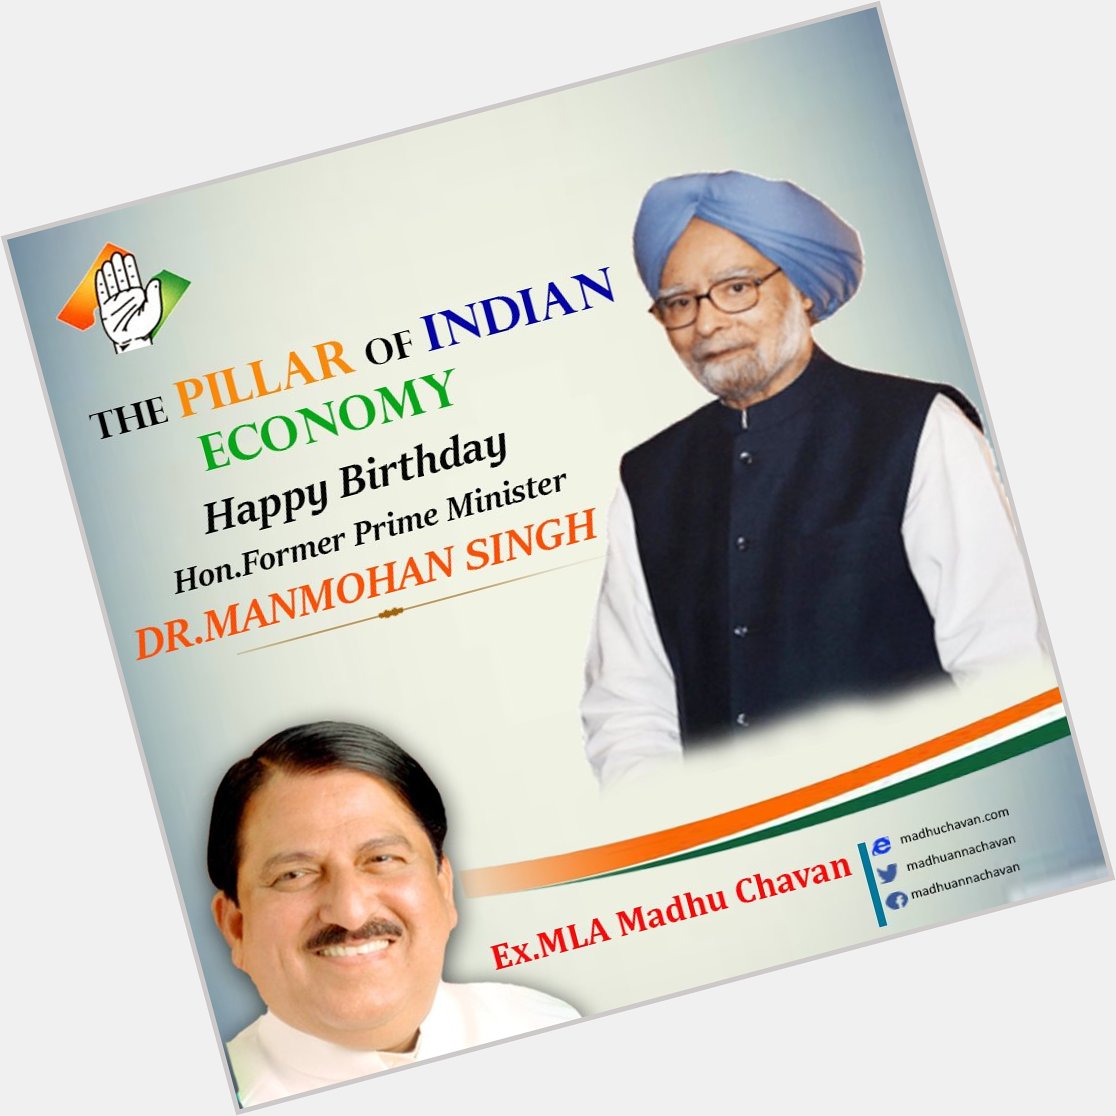 Happy Birthday to the pillar of Indian Economy, Hon. Former Prime Minister Manmohan Singh ji. 